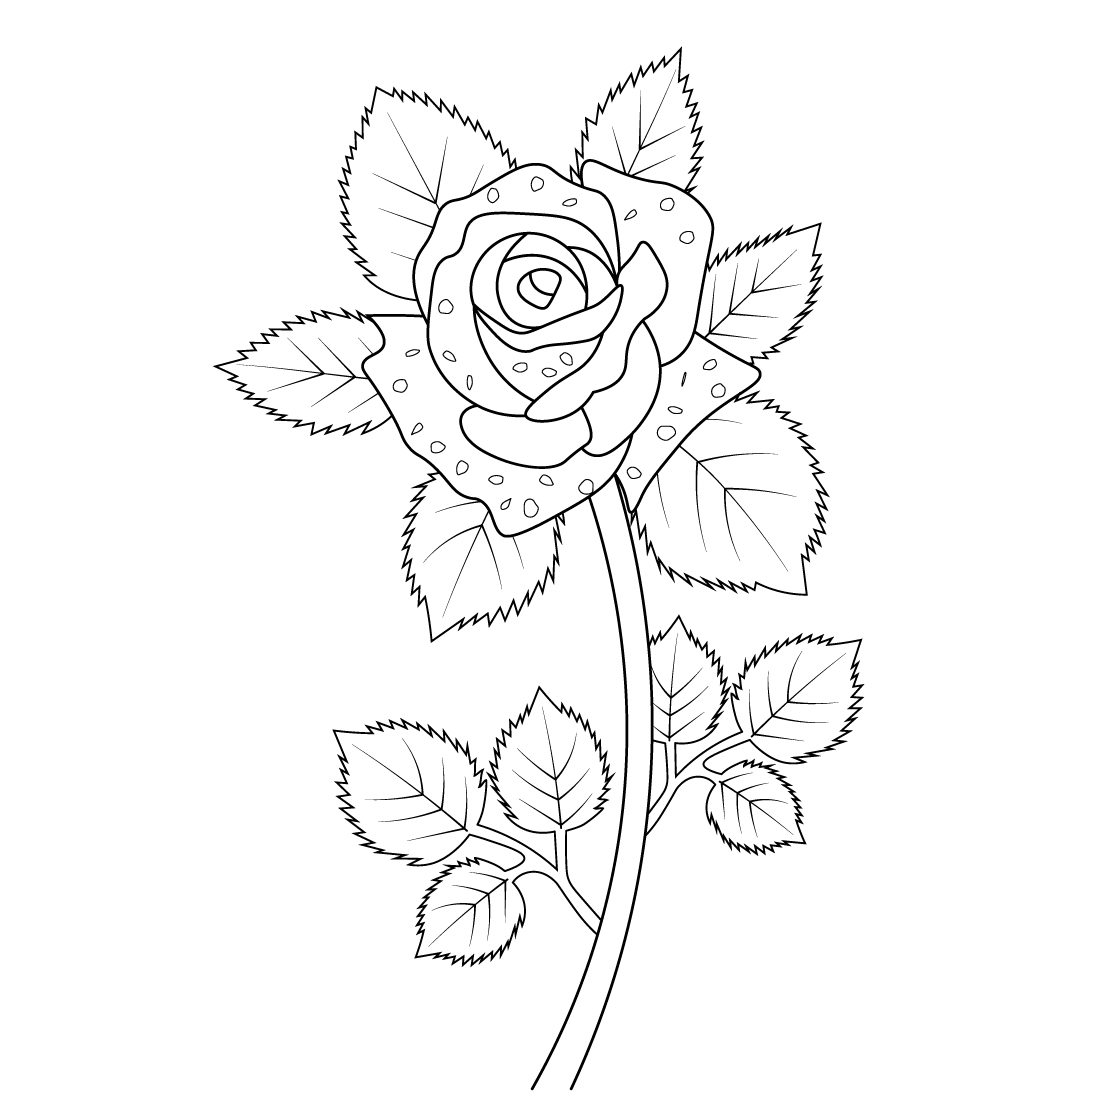 Simple rose stencil tattoo  Rose tattoo stencil, Simple rose tattoo,  Geometric tattoo stencil